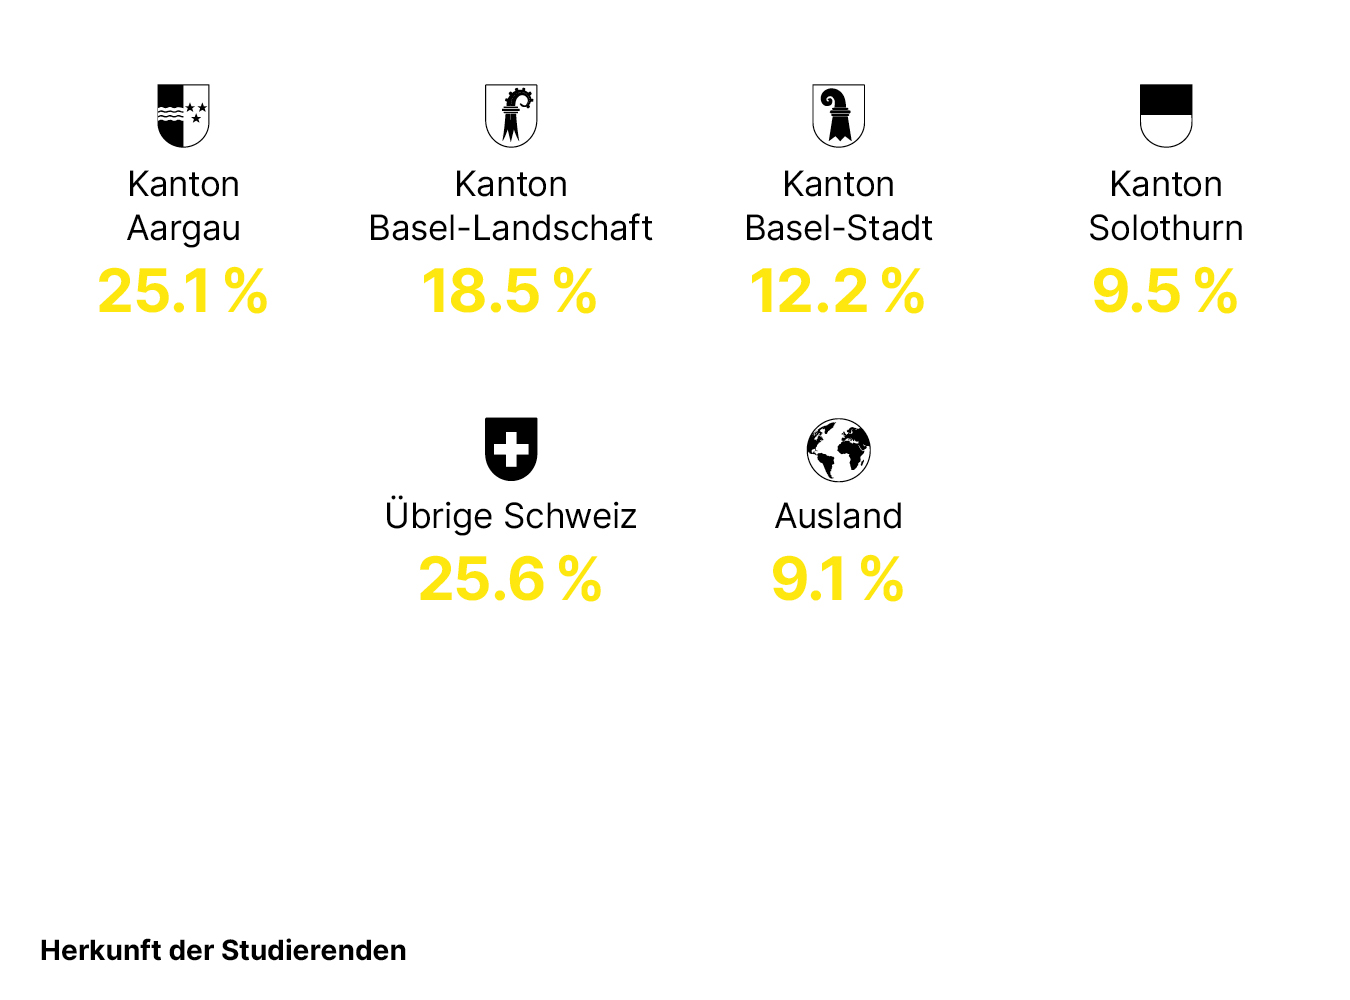 Kanton Aargau: 25.1 %, Kanton Basel-Landschaft: 18.5 %, Kanton Basel-Stadt: 12.2 %, Kanton Solothurn: 9.5 %, Übrige Schweiz: 25.6 %, Ausland: 9.1 %